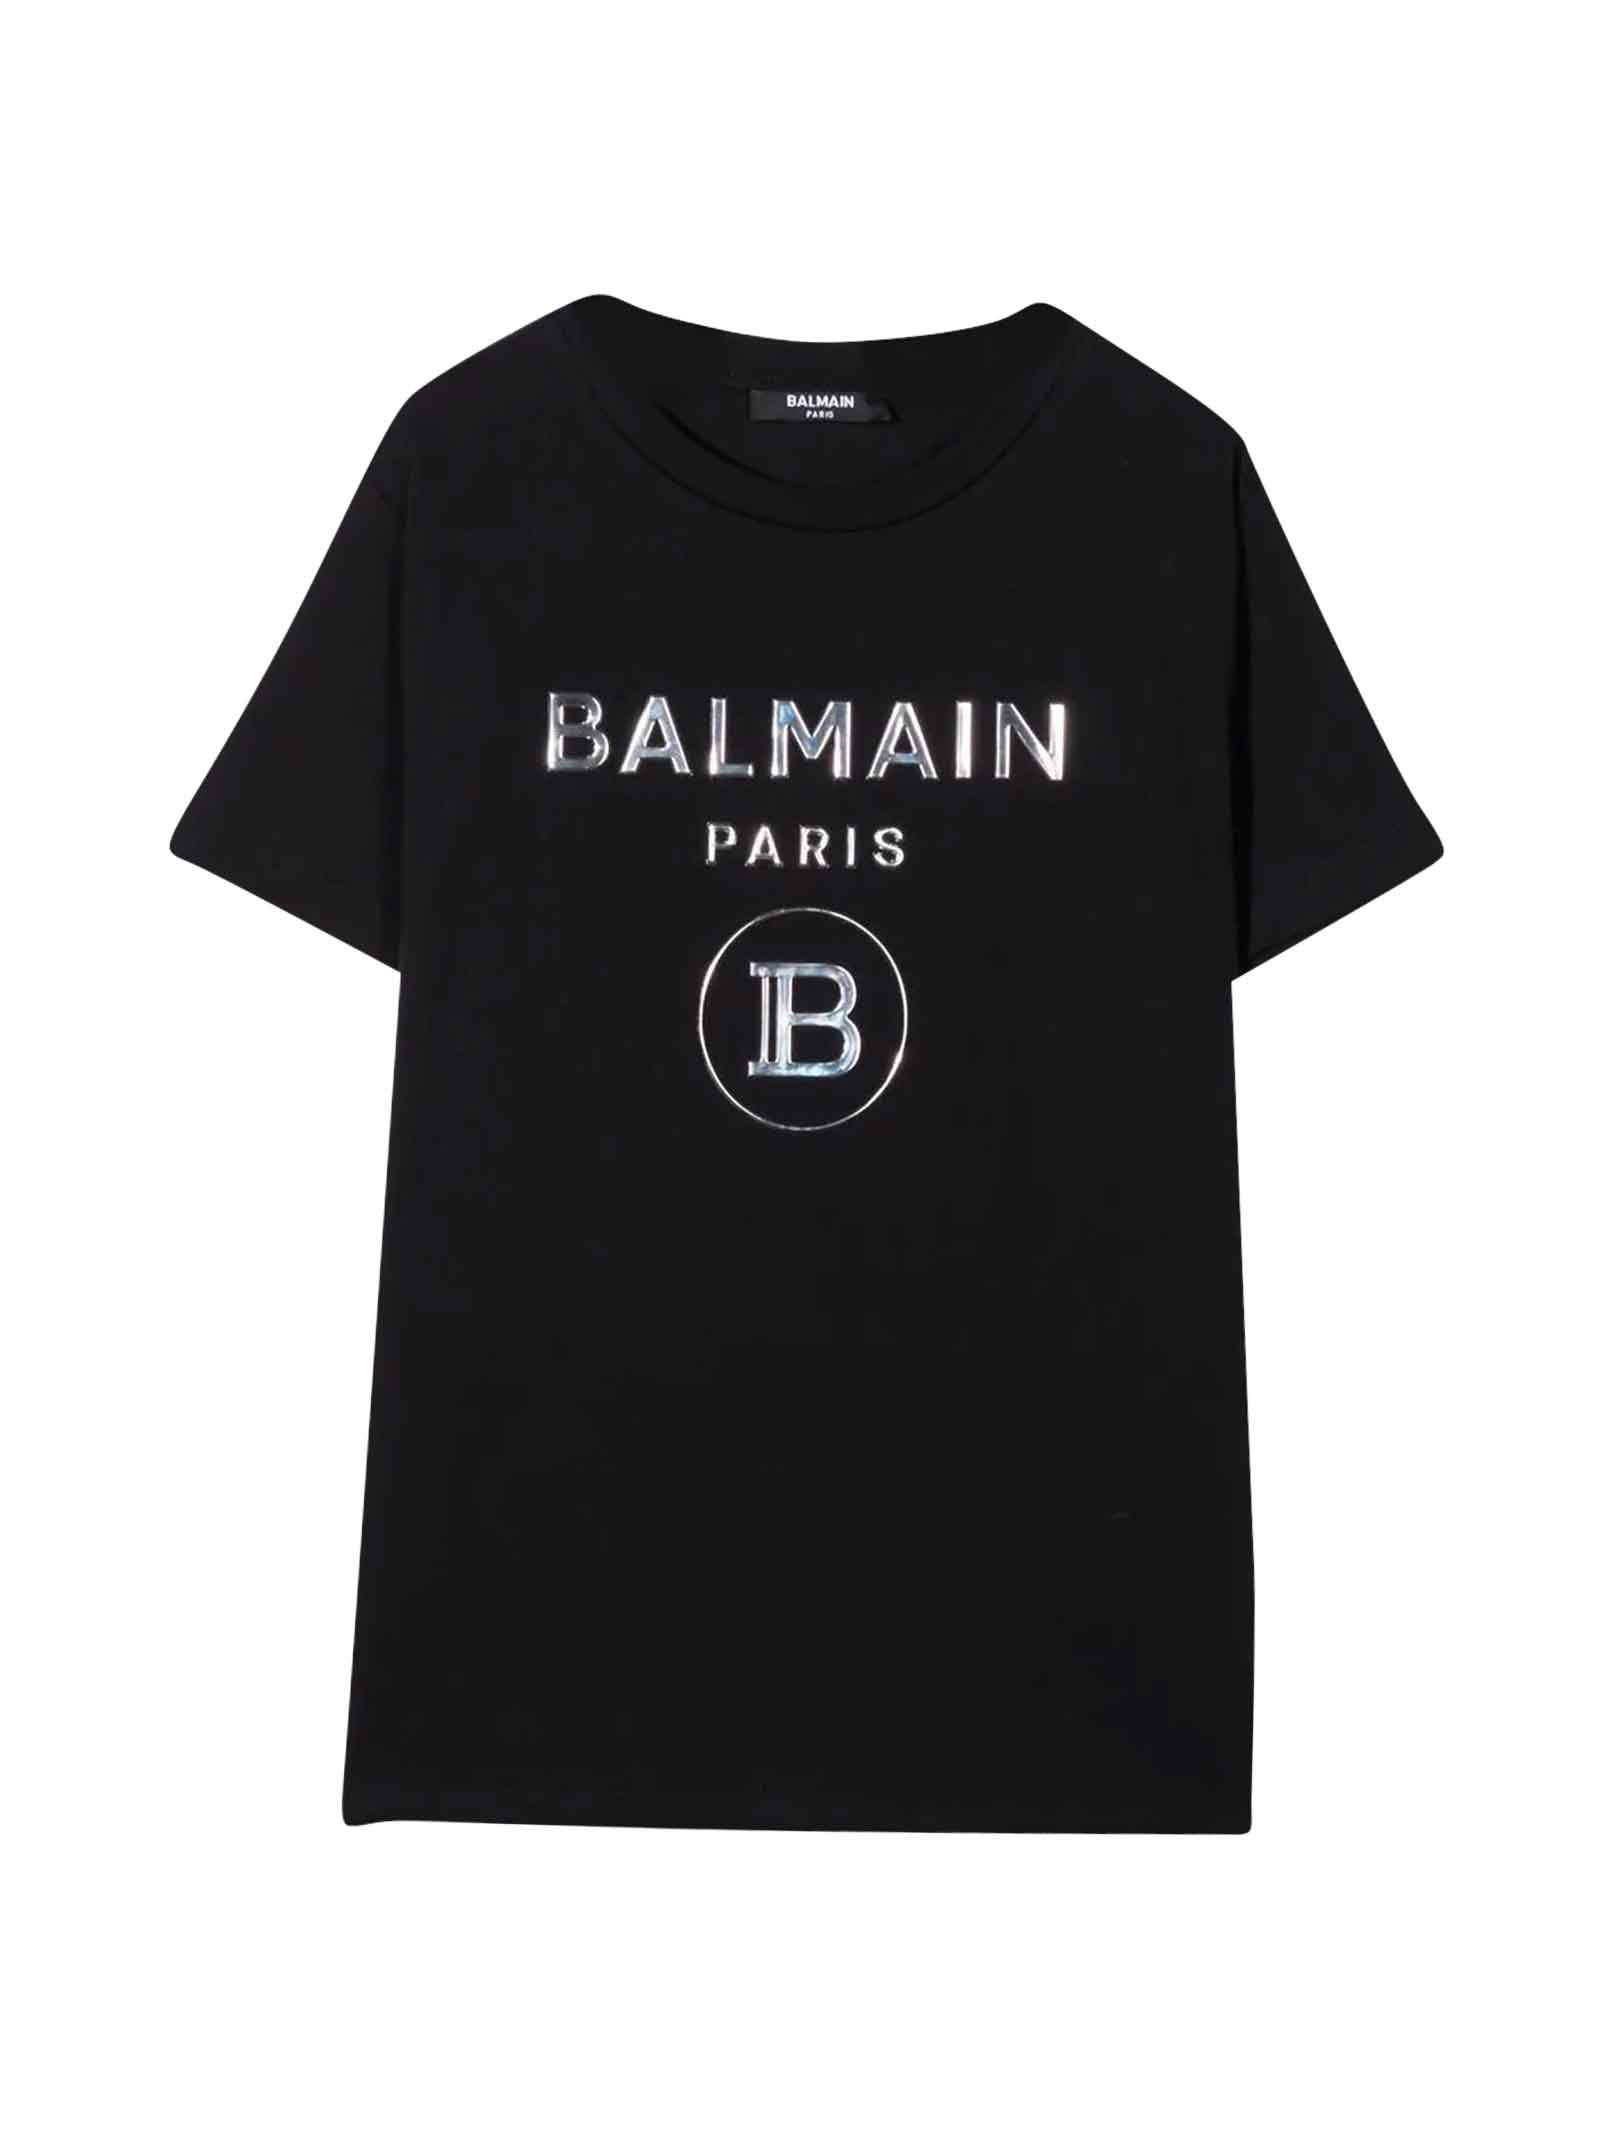 Balmain Black Teen T-shirt With White Print